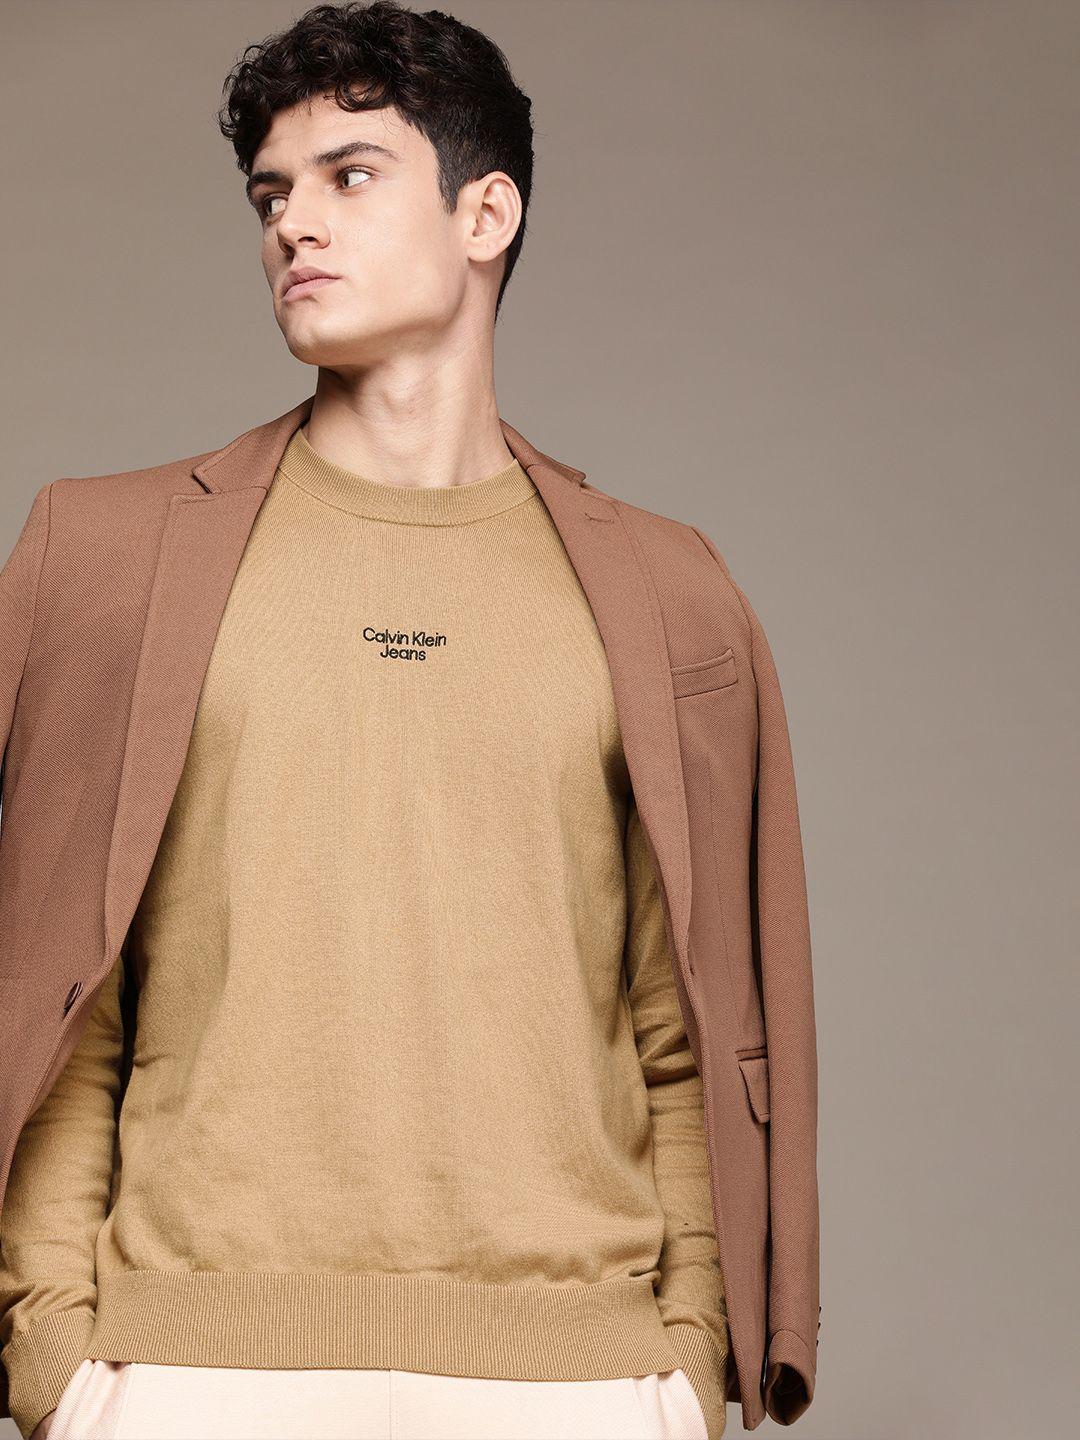 calvin klein jeans men camel brown brand logo embroidered pullover sweater